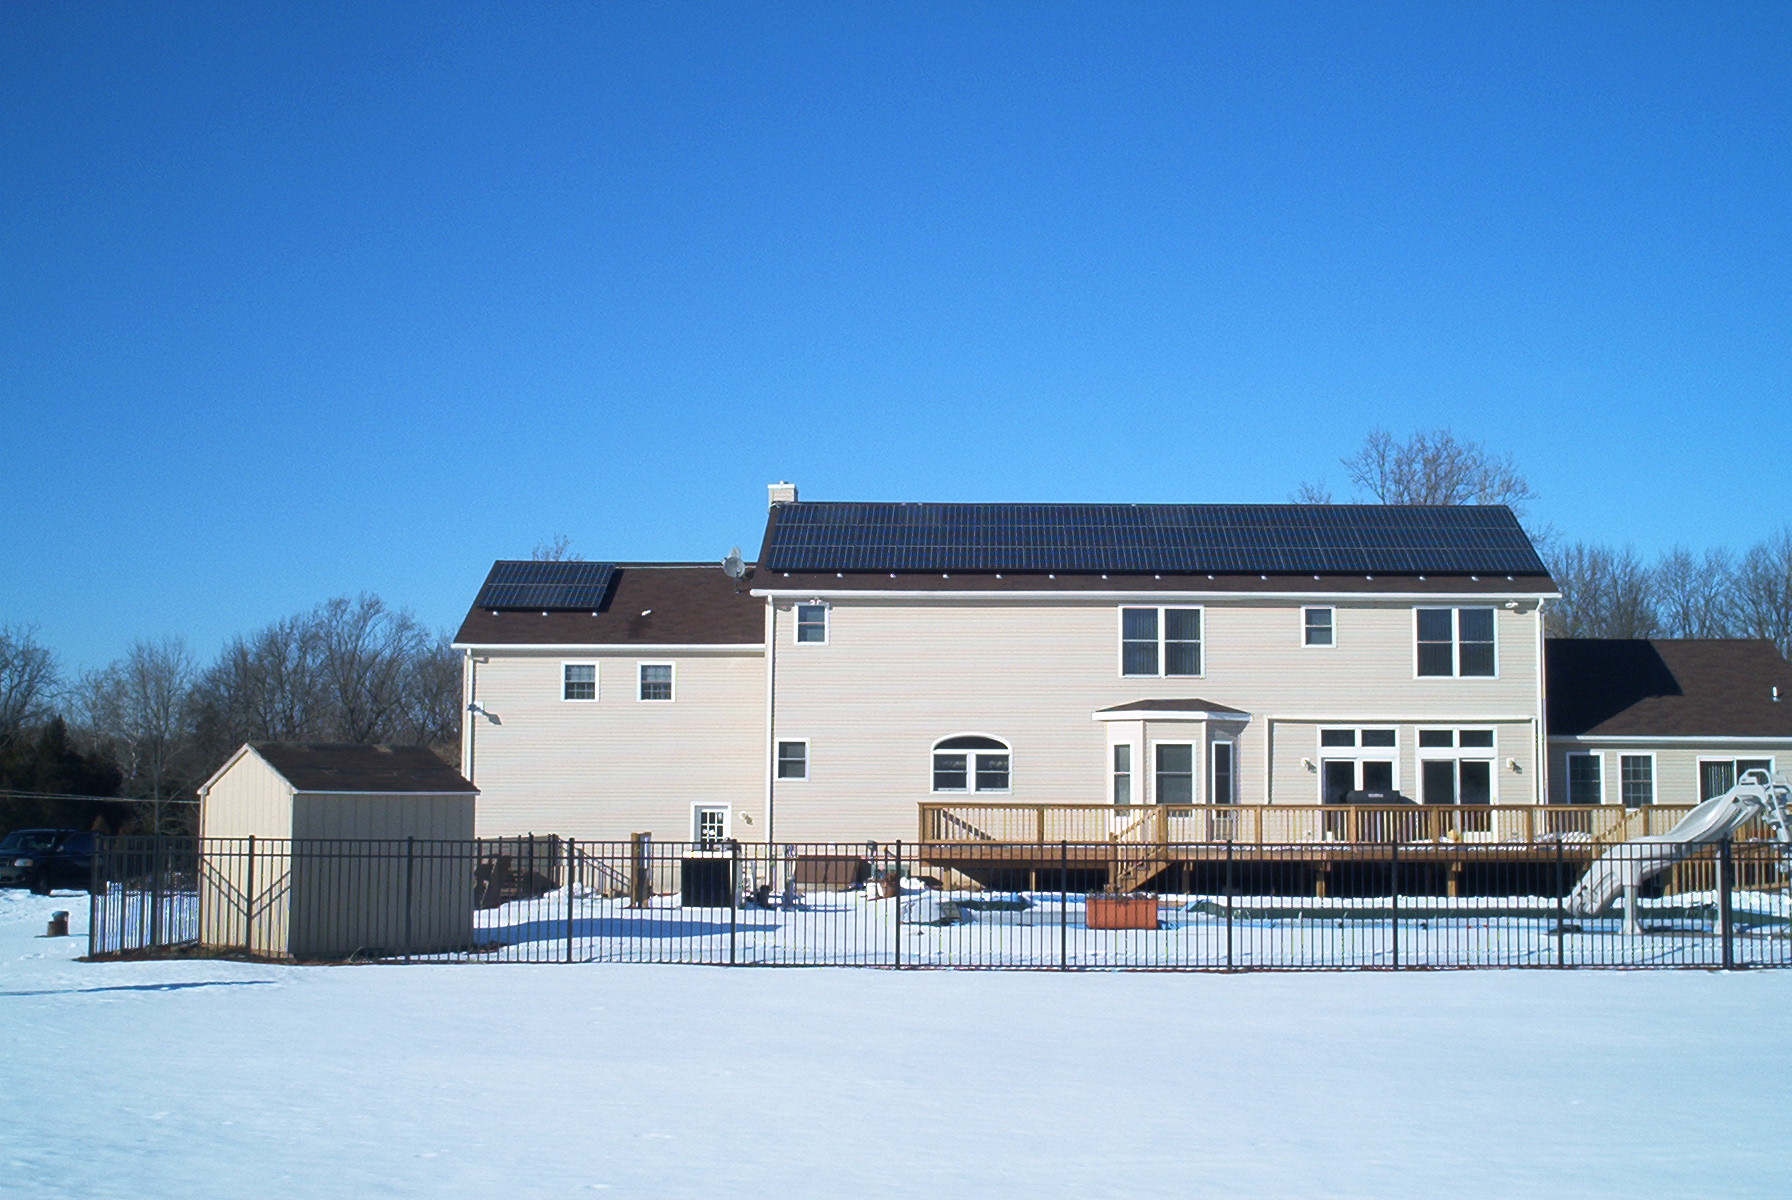 House Solar Panels